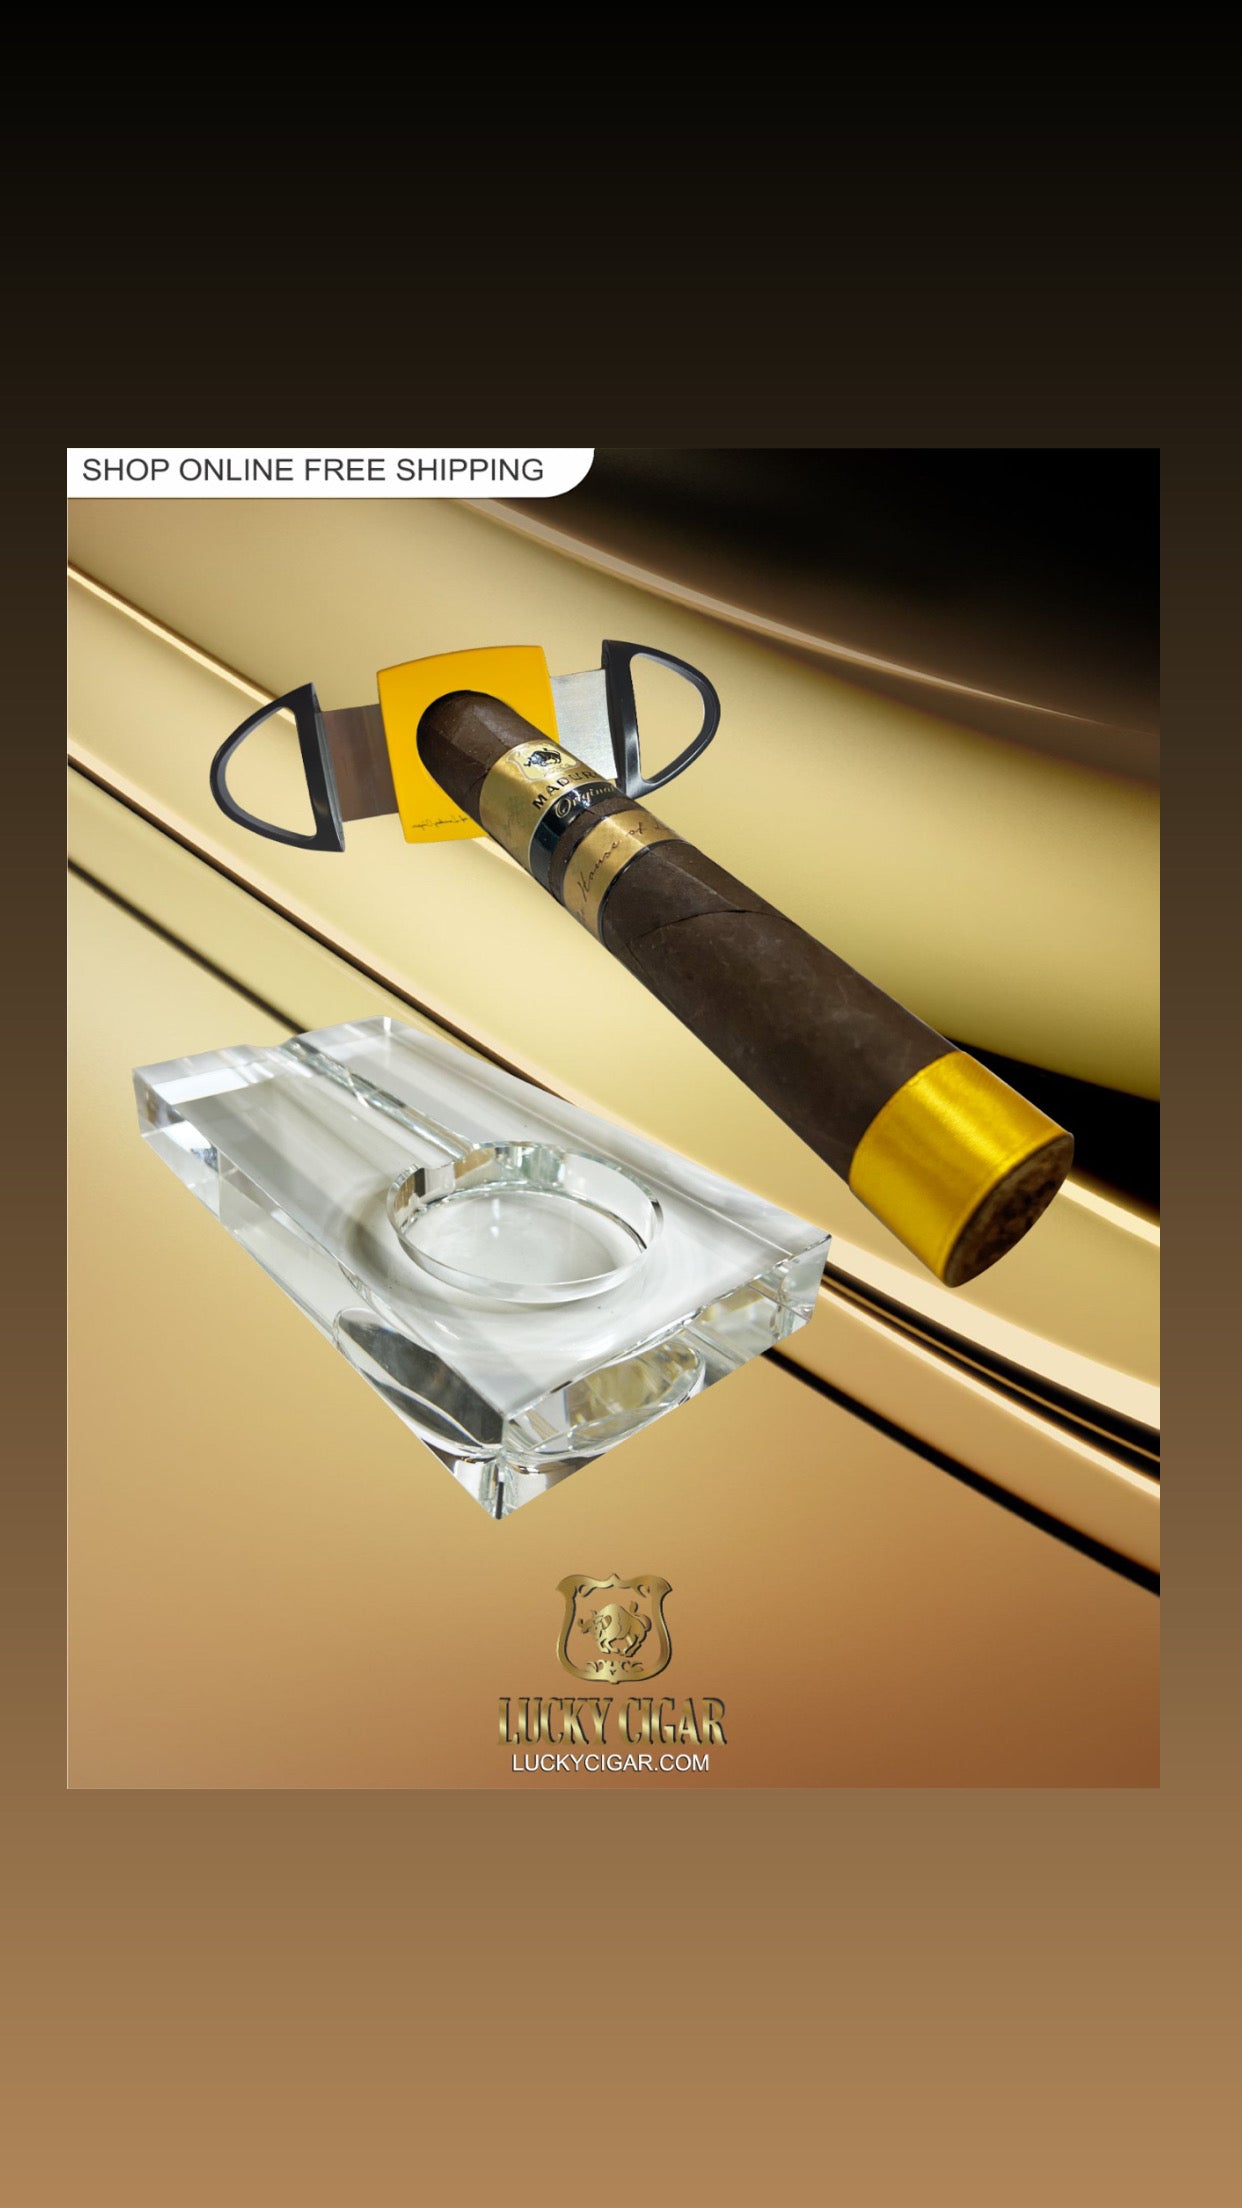 Lucky Cigar Sampler Sets: Set of 1 Maduro Original Torpedo Cigar with Ashtray, Cutter